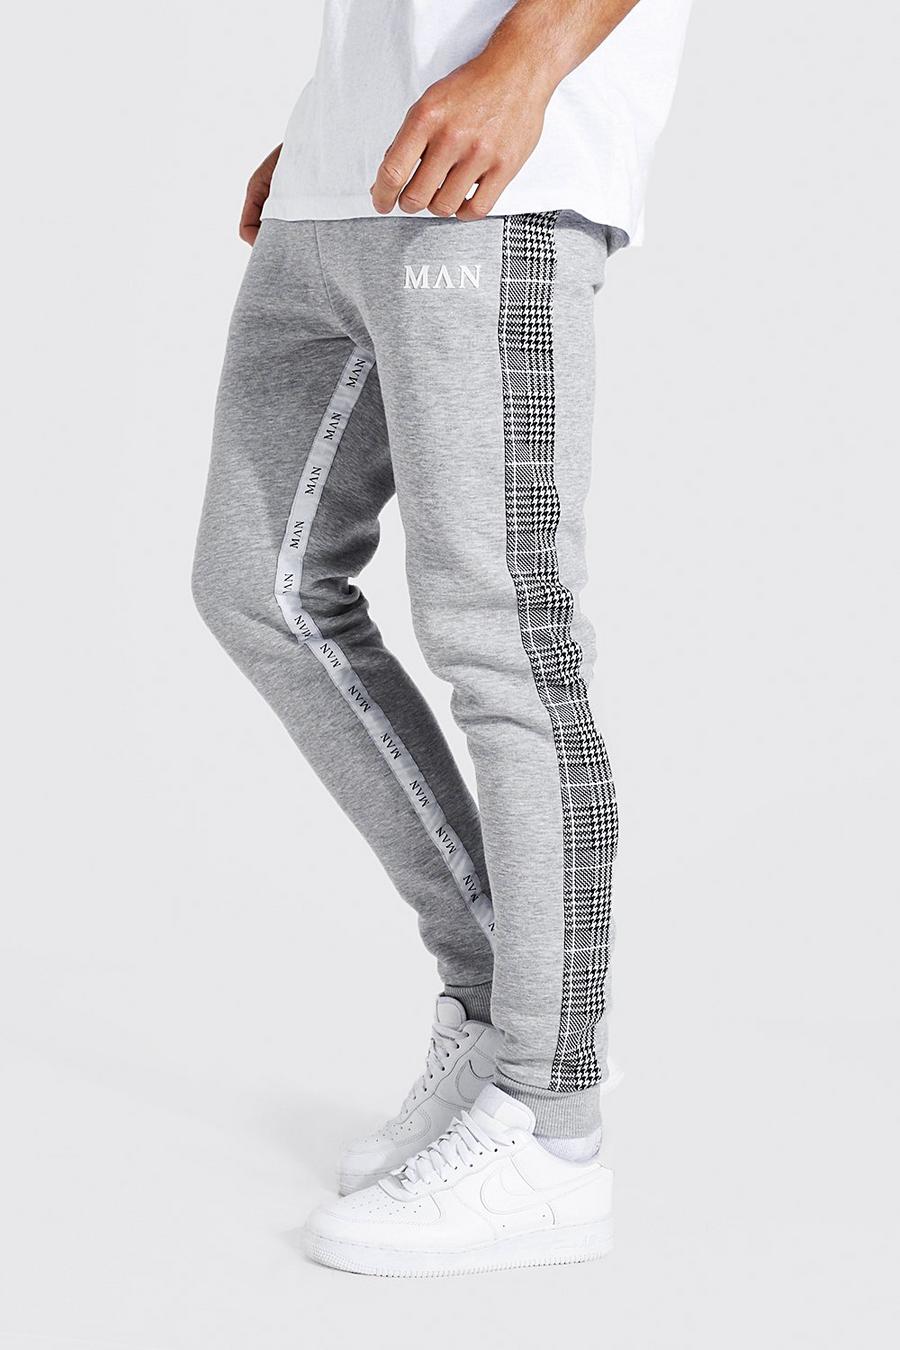 Pantalón deportivo Tall MAN pitillo de tela jacquard con franja, Grey marl image number 1